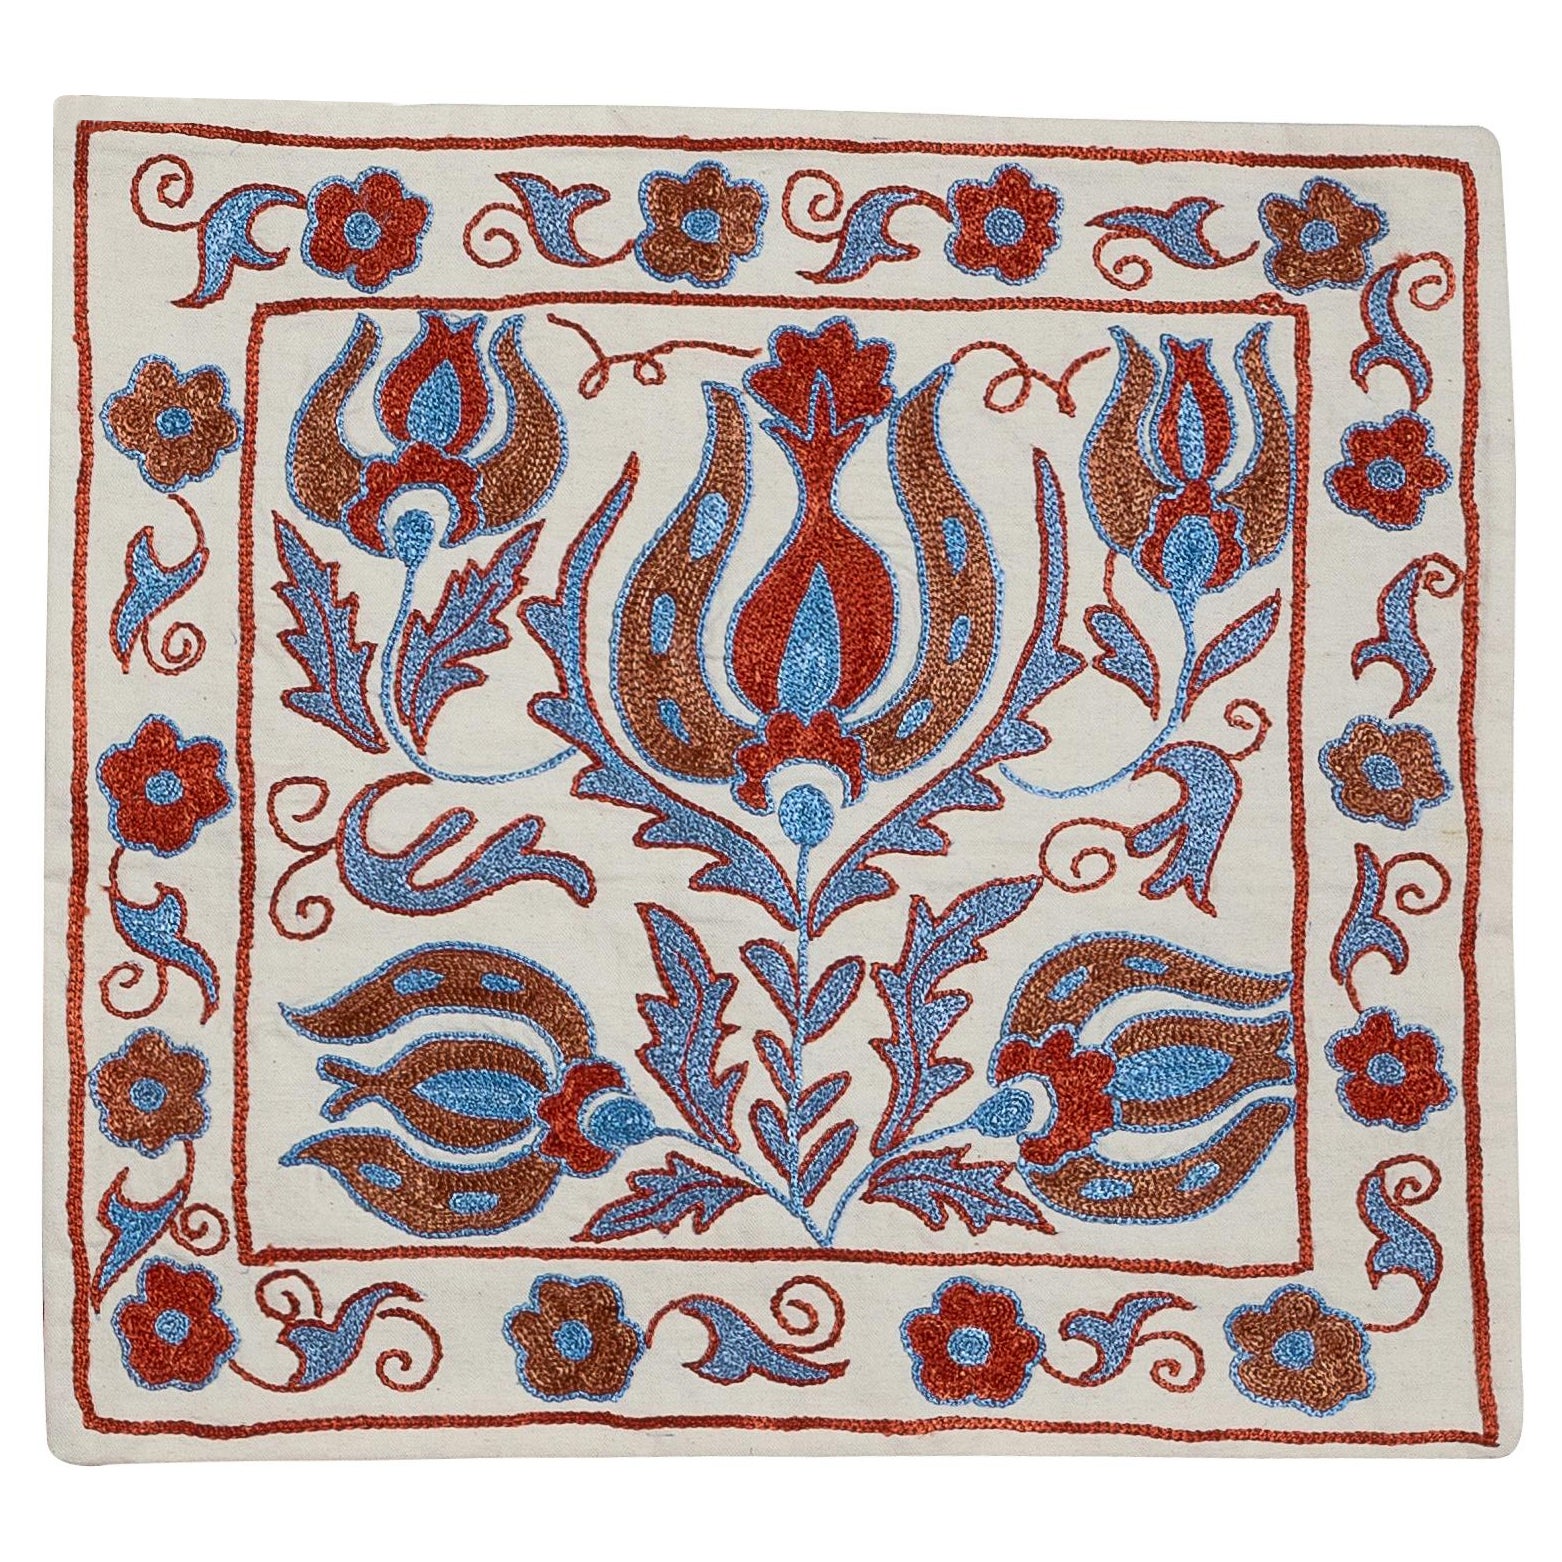 18"x18" Uzbek Suzani Throw Pillow, Hand Embroidered Cotton & Silk Cushion Cover